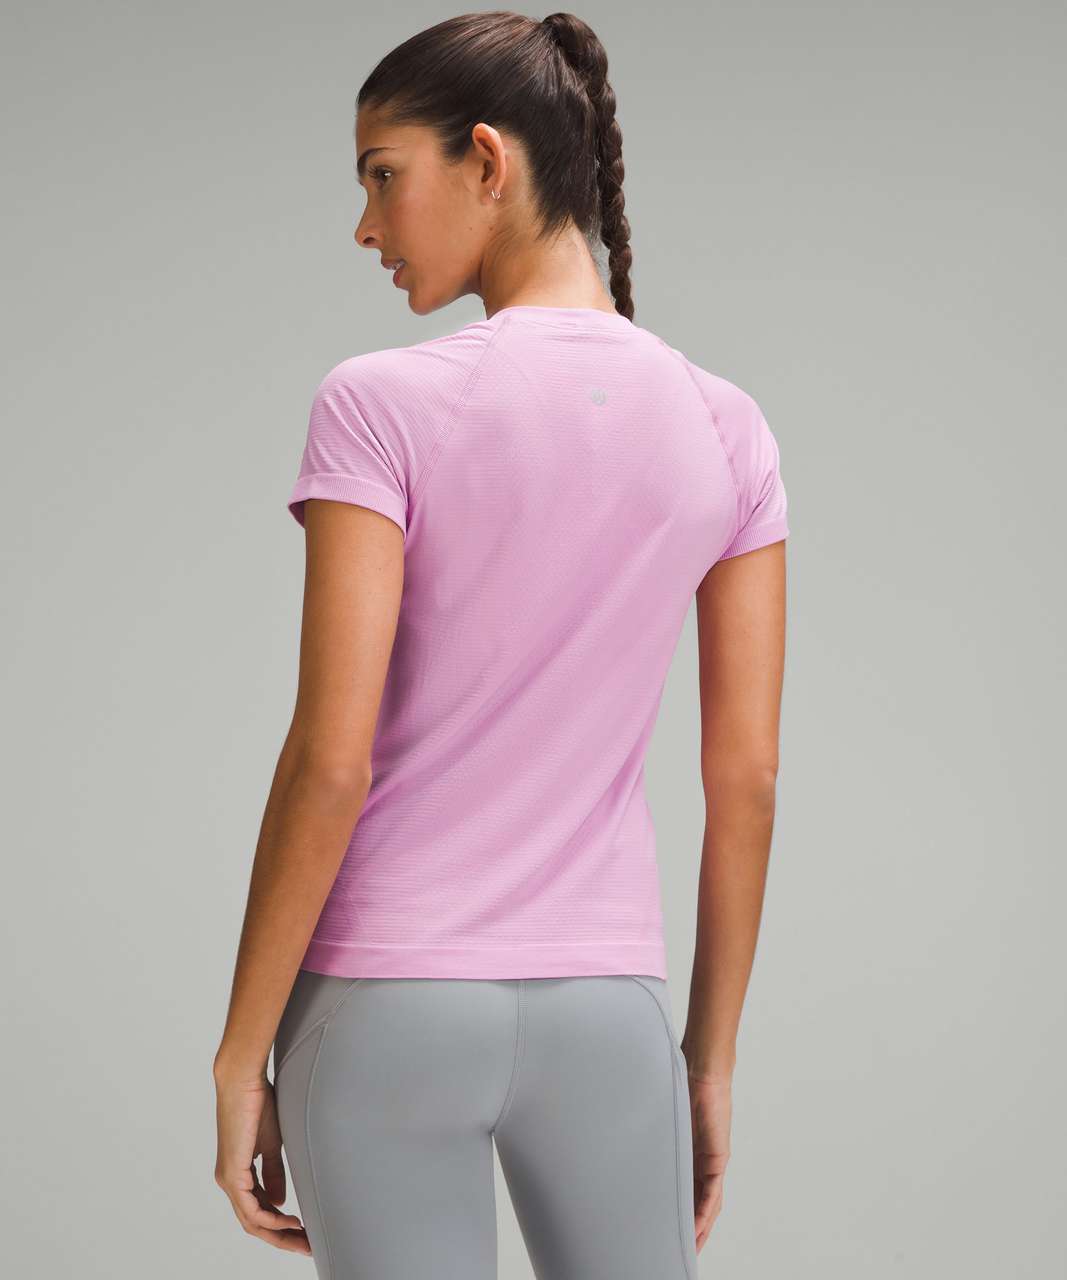 Lululemon Swiftly Tech Short-Sleeve Shirt 2.0 *Race Length - Dahlia Mauve / Dahlia Mauve